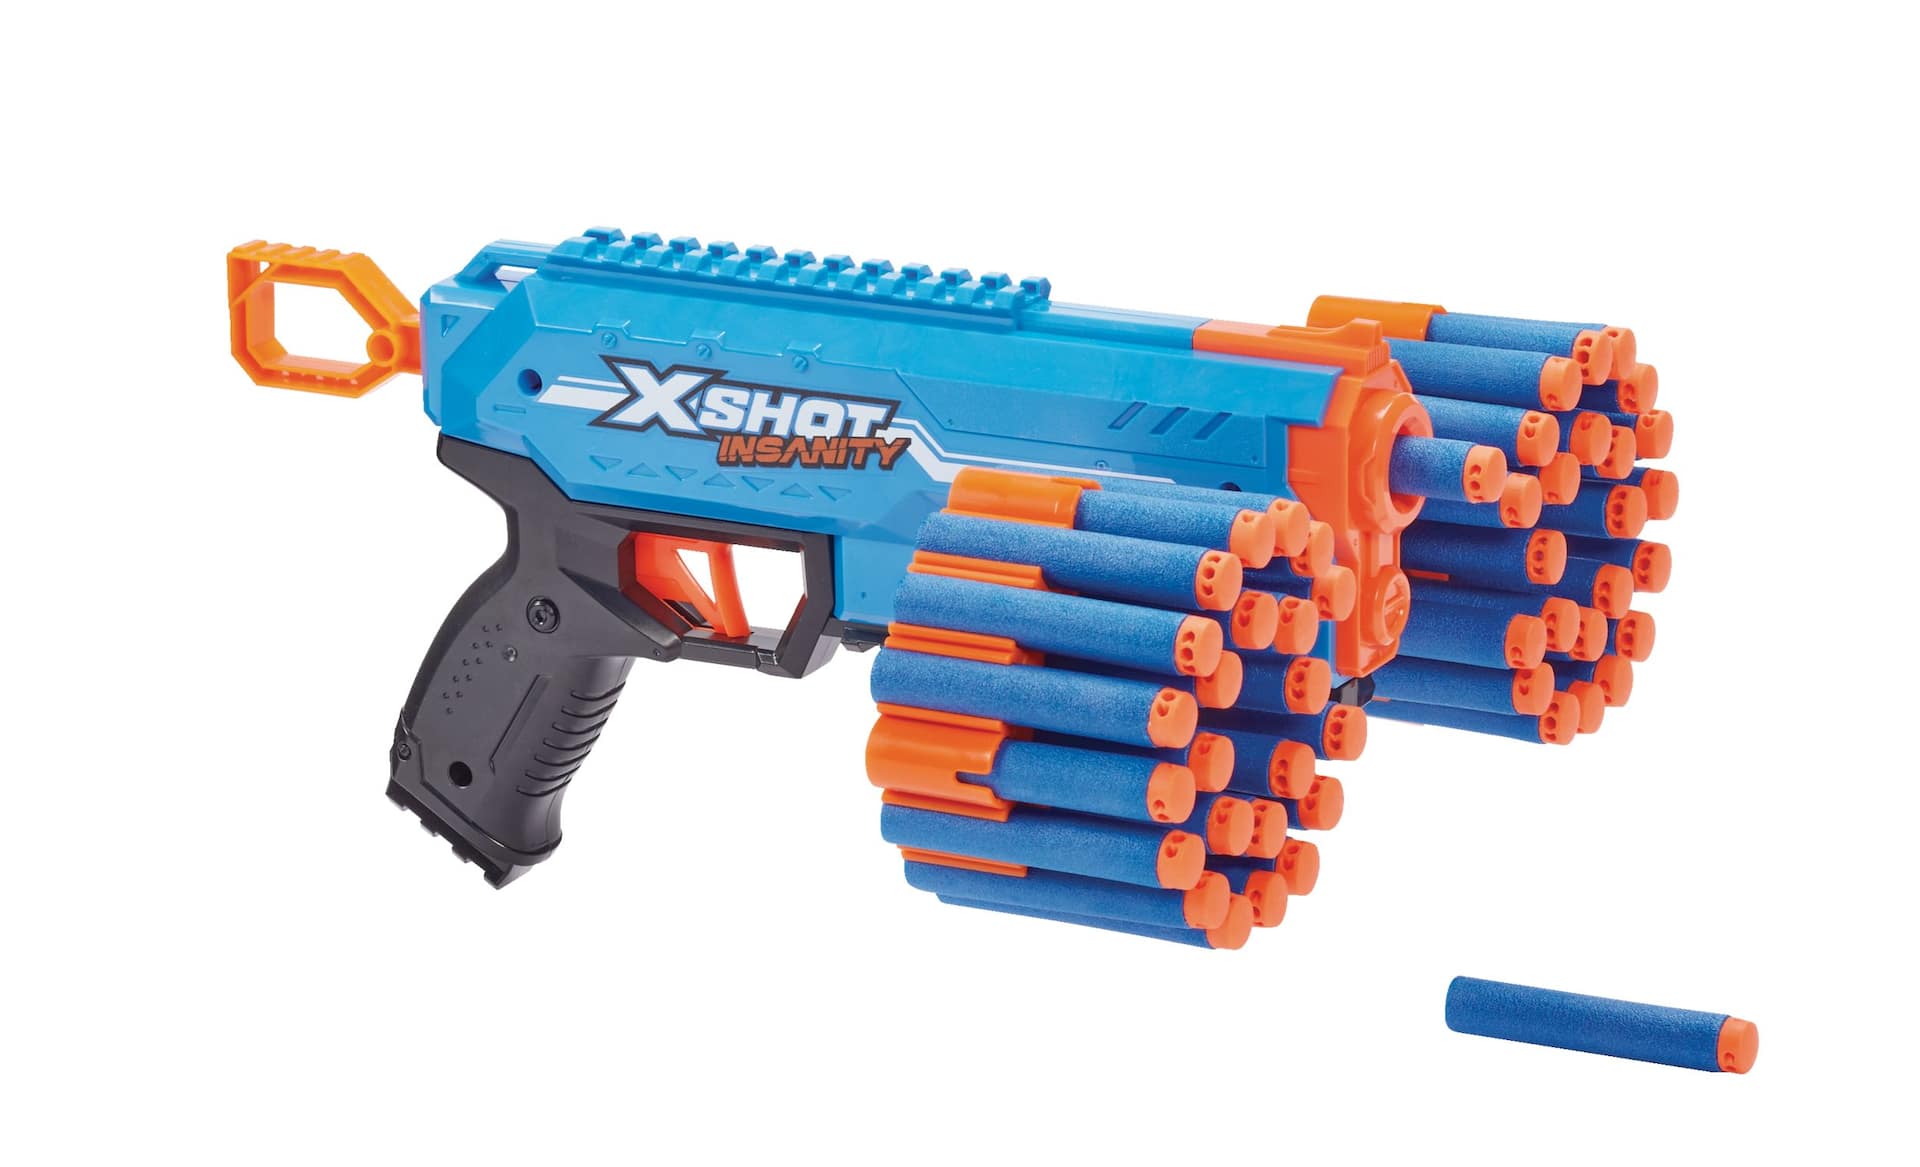 X-Shot Insanity S1 Maniac Dart Pistol with Accessories, 36-Darts